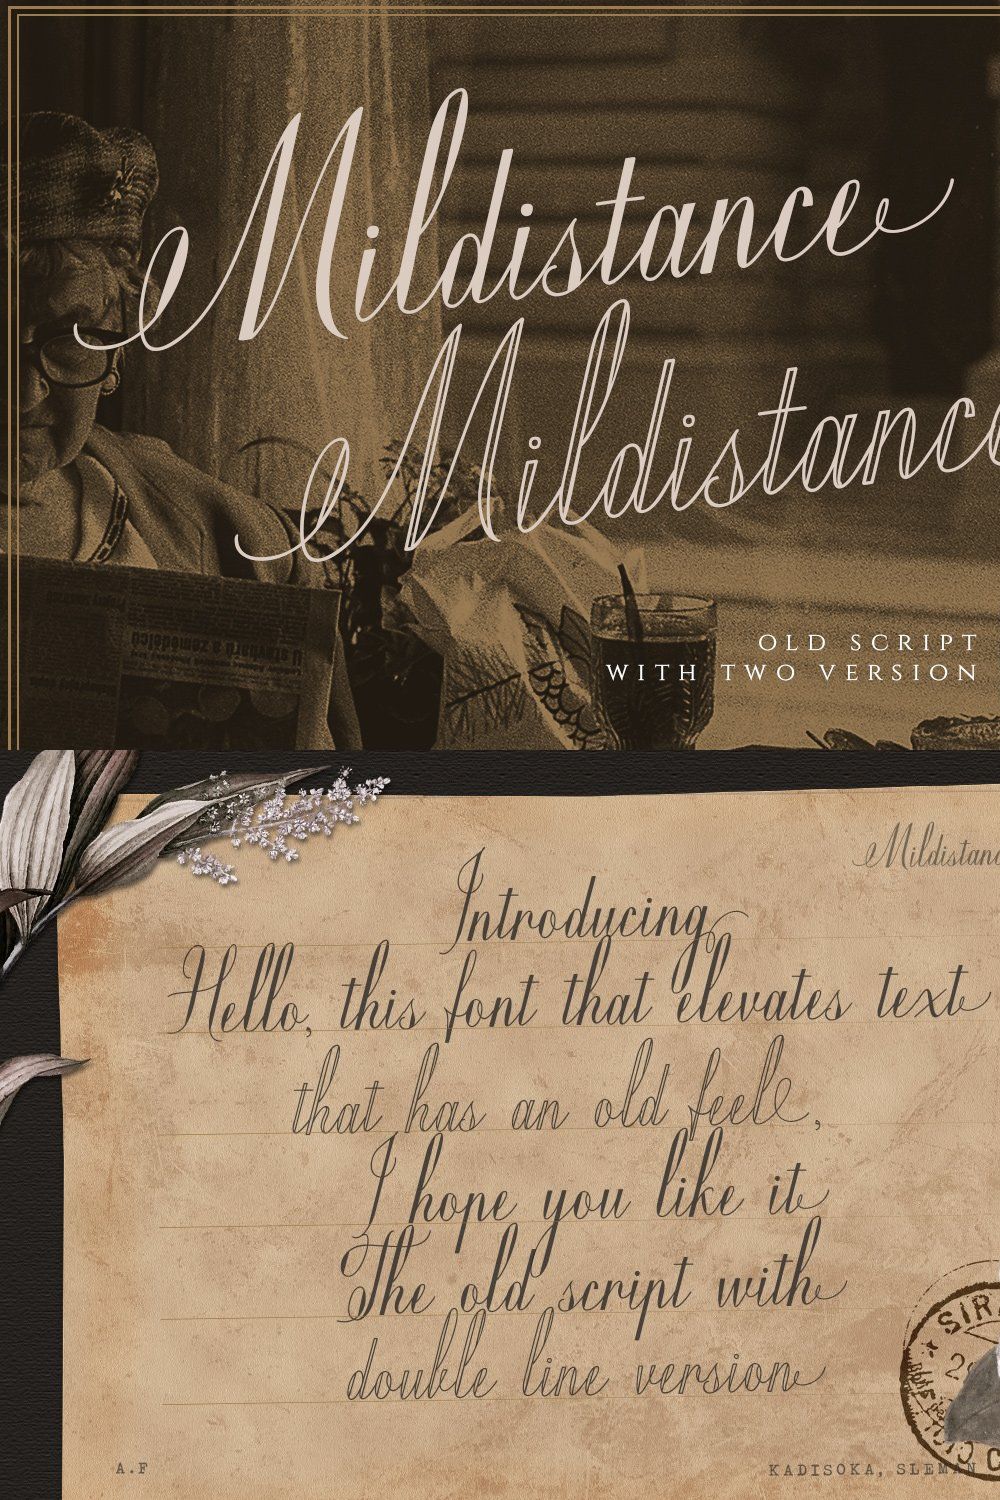 Mildistance - Old Script pinterest preview image.